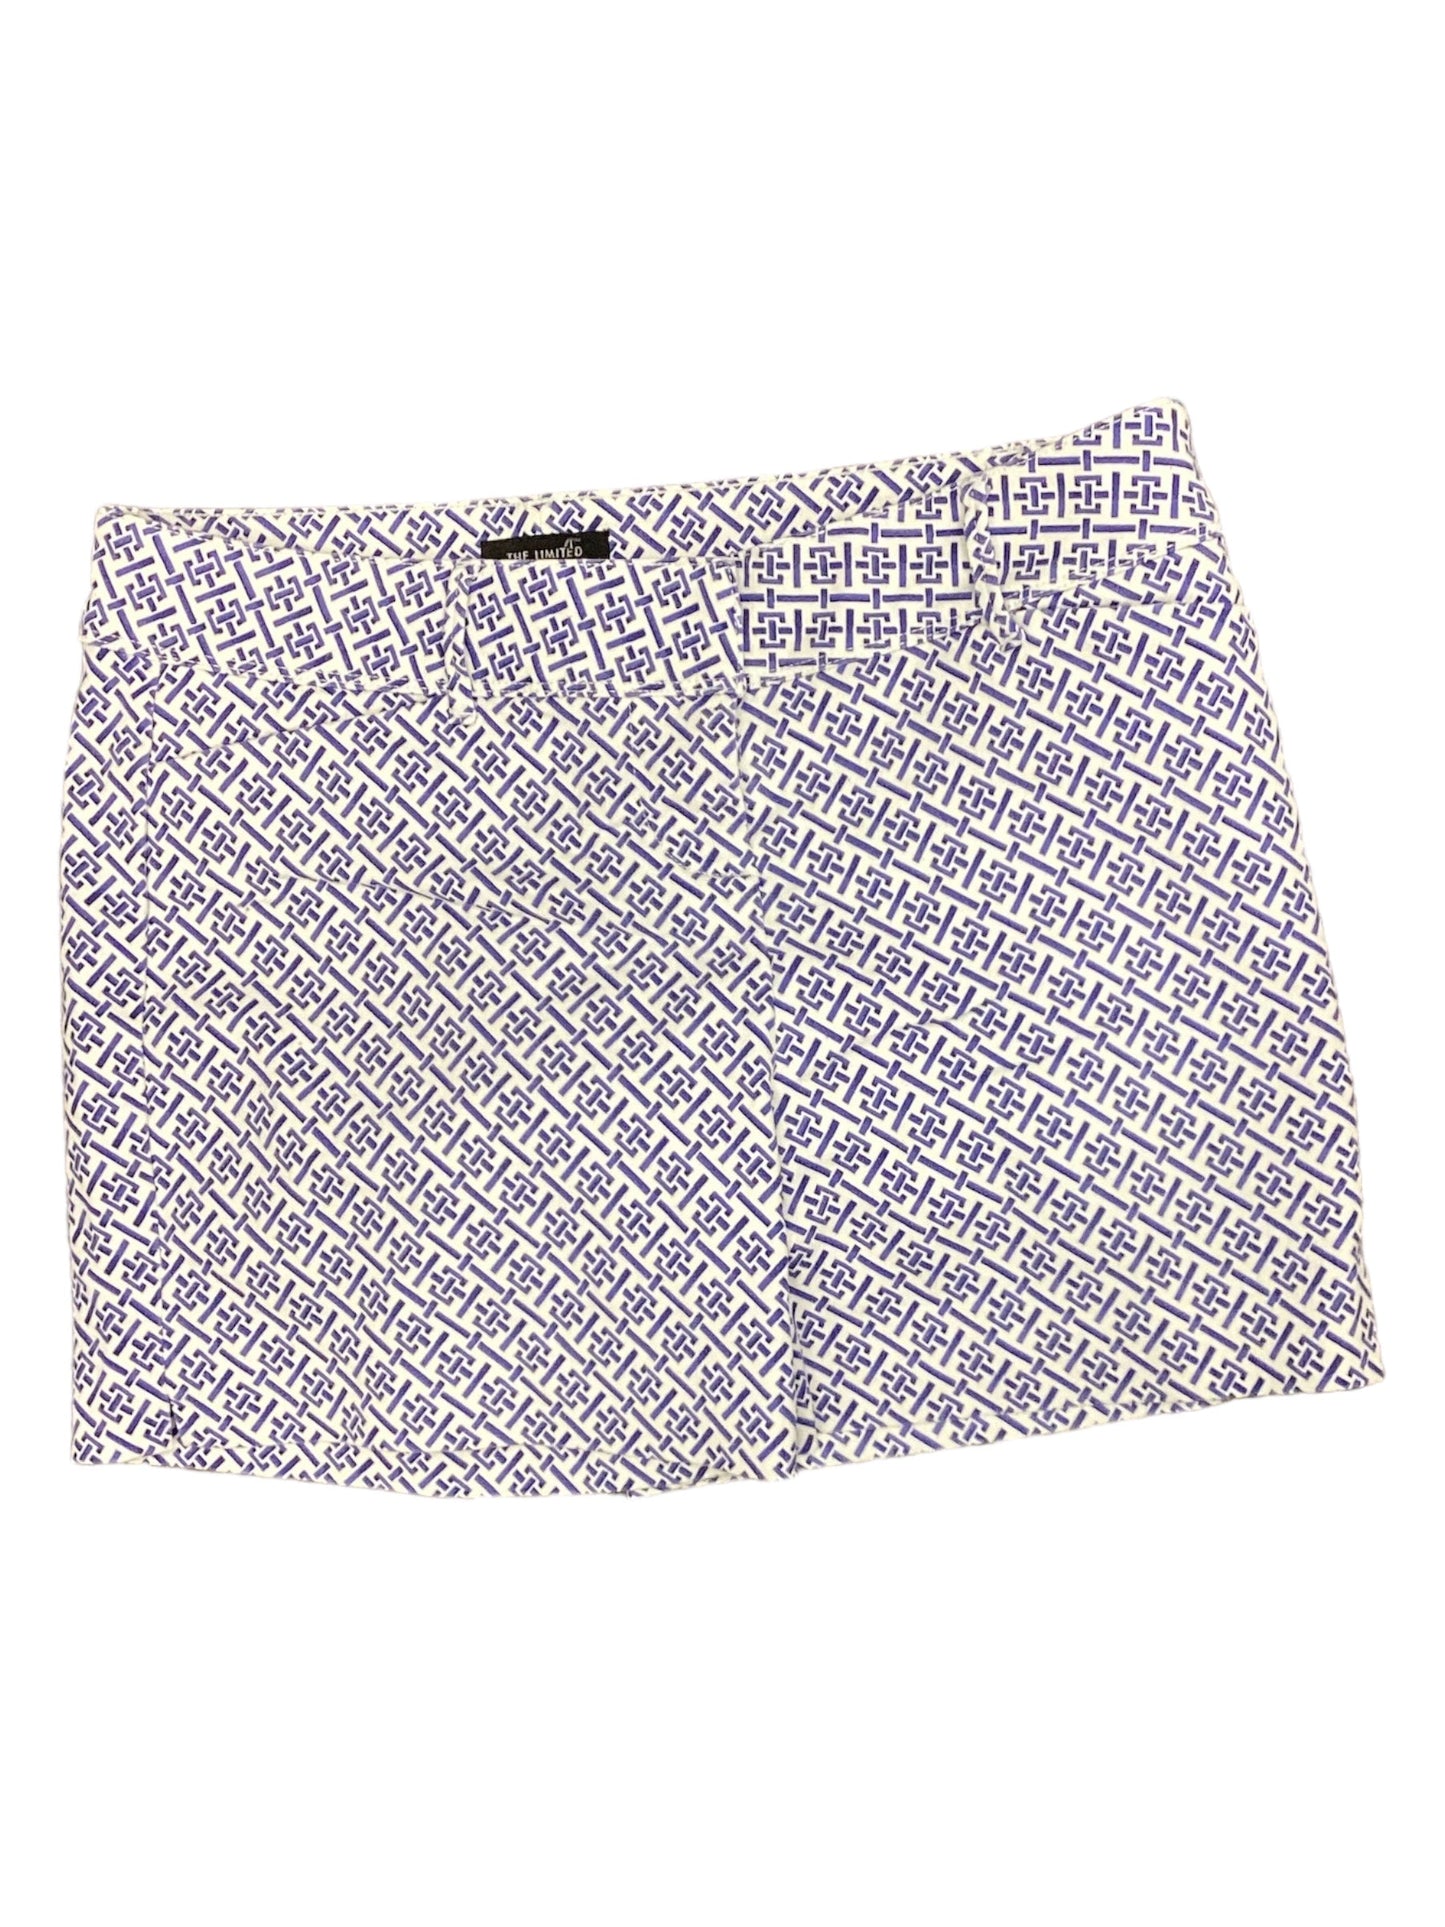 Blue & White Shorts Limited, Size 8